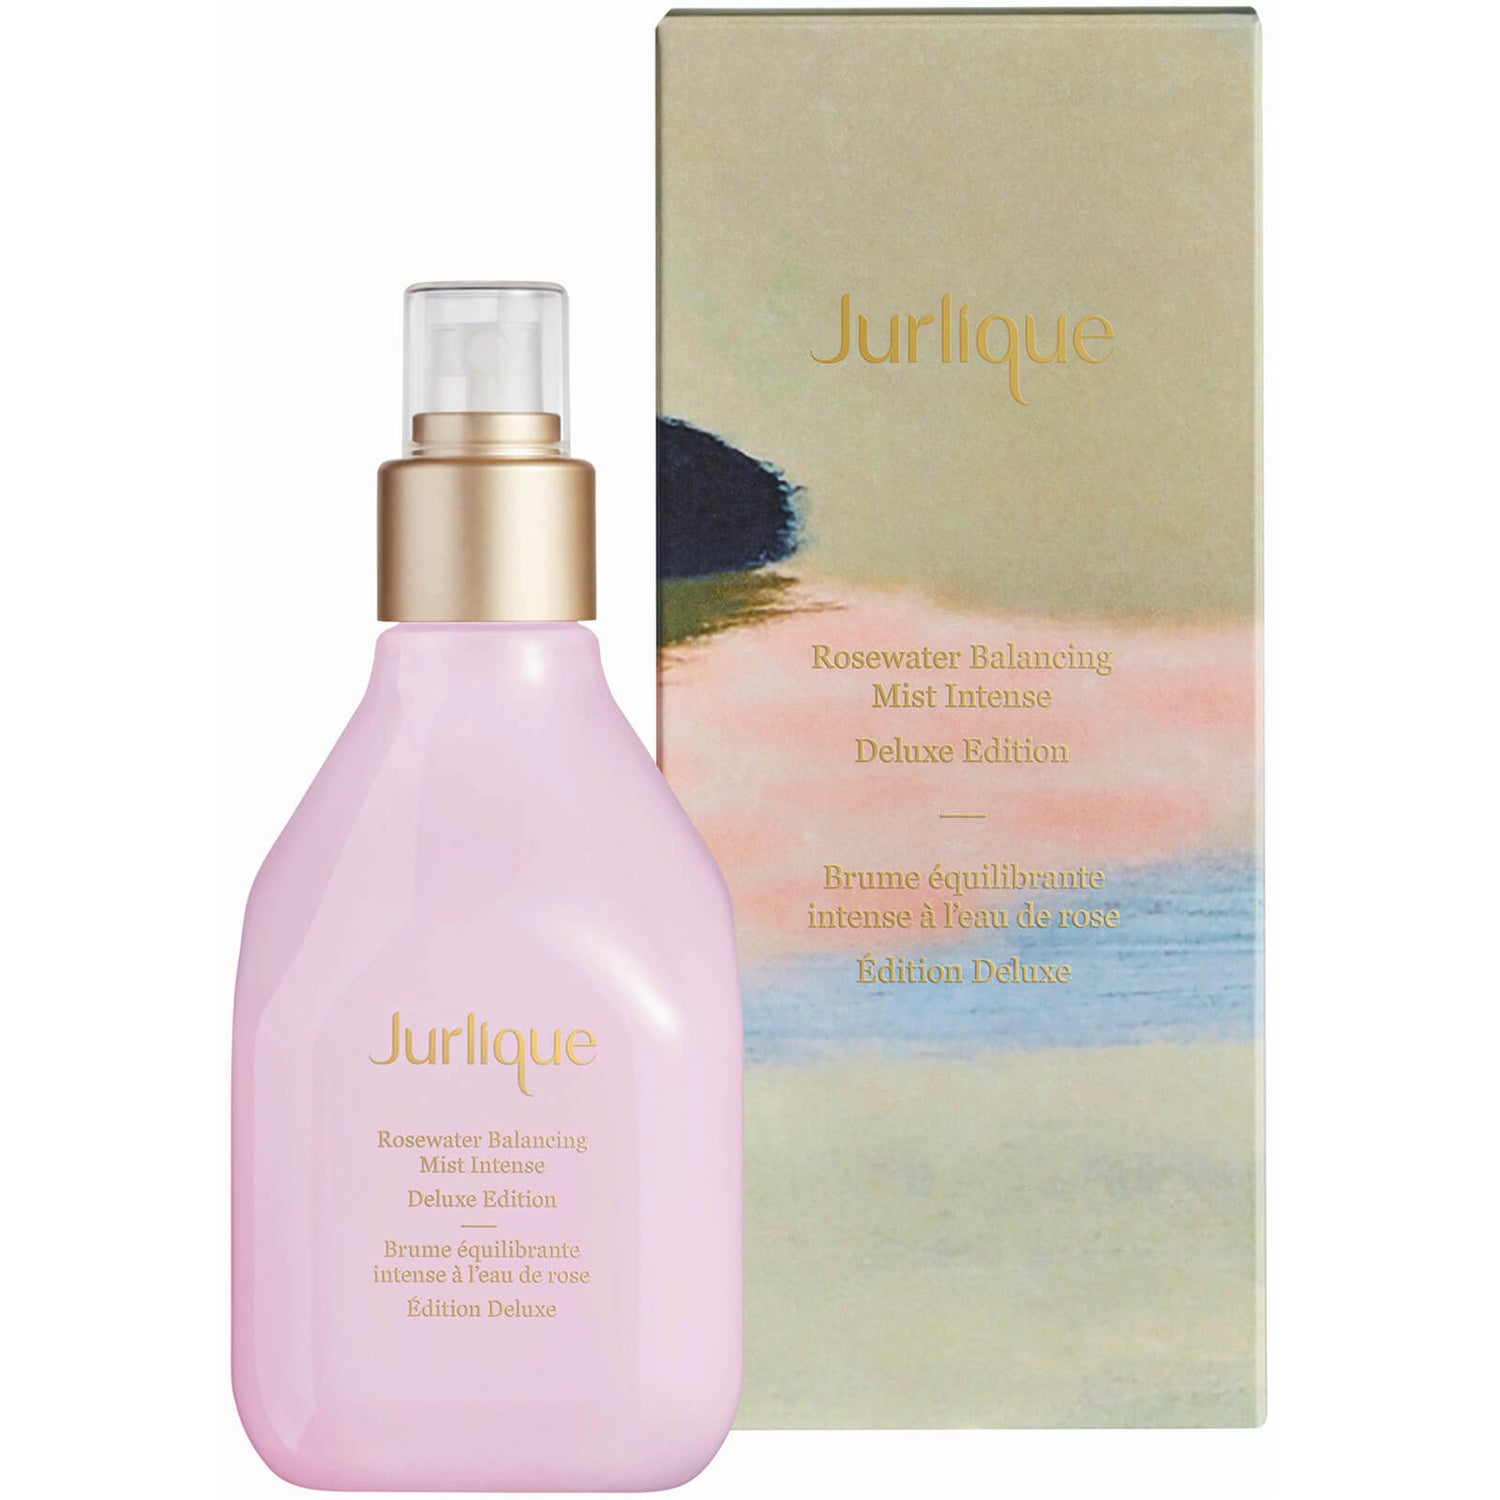 Jurlique Rosewater Balancing Mist Intense Deluxe Edition 200ml